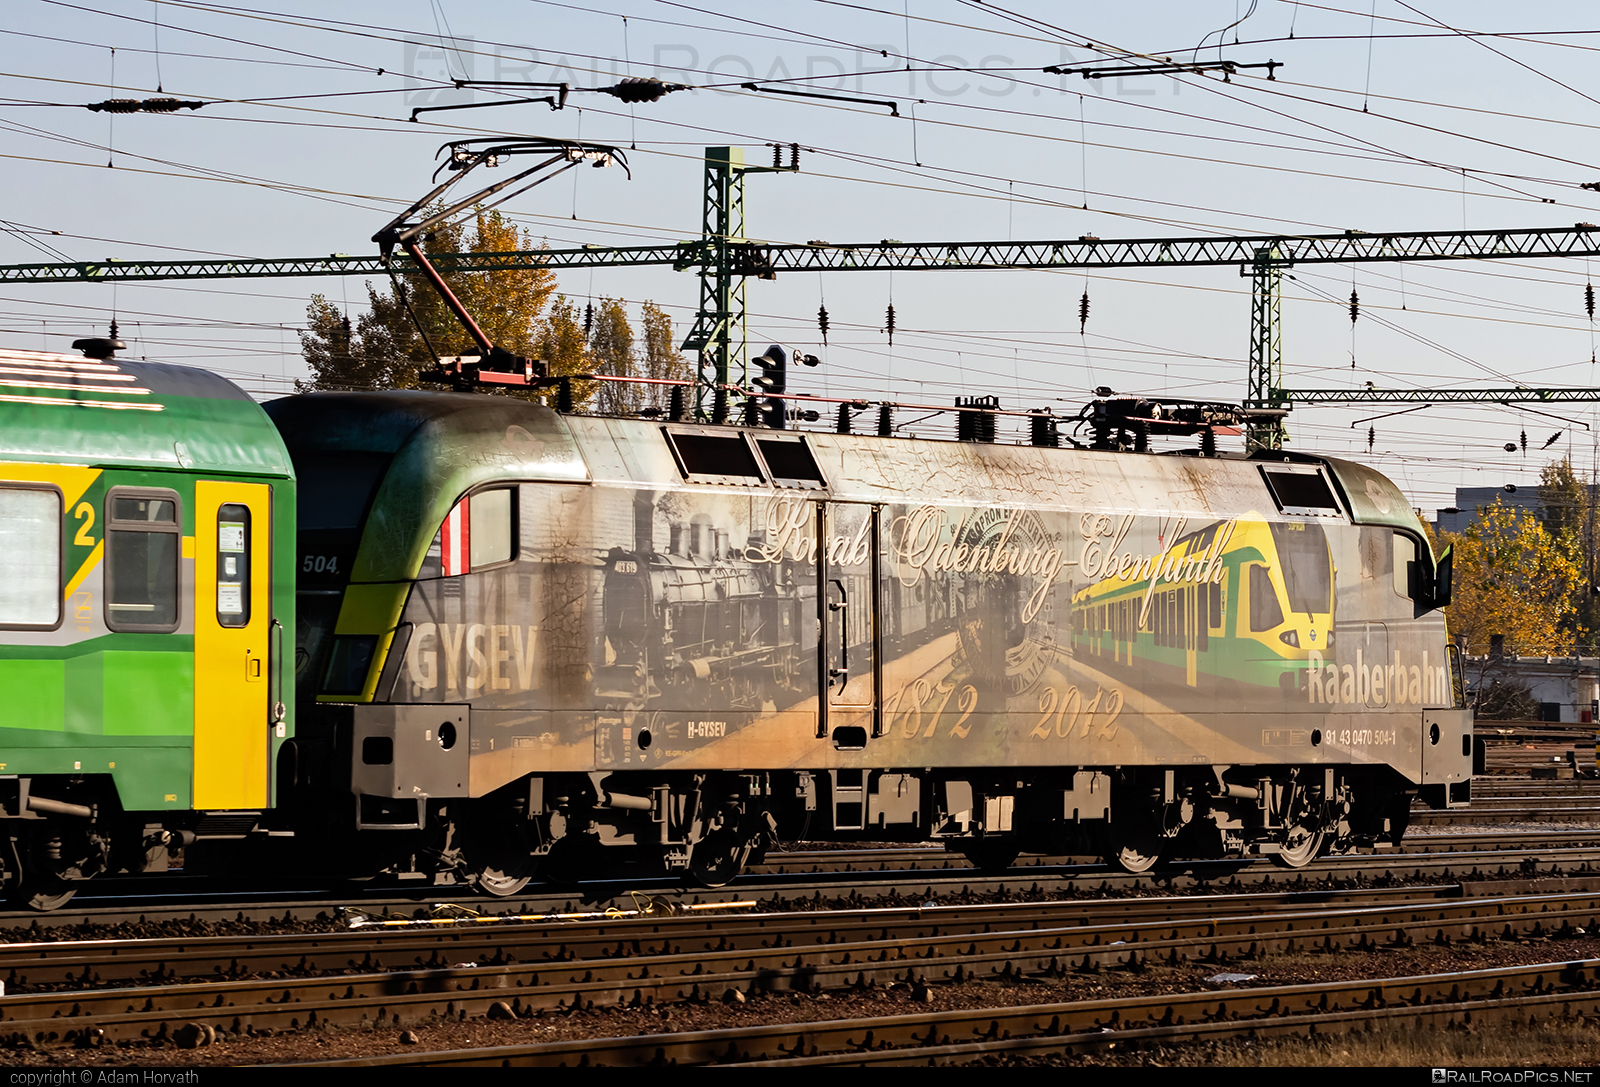 Siemens ES 64 U2 - 470 504 operated by GYSEV - Györ-Sopron-Ebenfurti Vasut Részvénytarsasag #es64 #es64u2 #eurosprinter #gyorsopronebenfurtivasutreszvenytarsasag #gysev #raaberbahn #siemens #siemenses64 #siemenses64u2 #siemenstaurus #taurus #tauruslocomotive